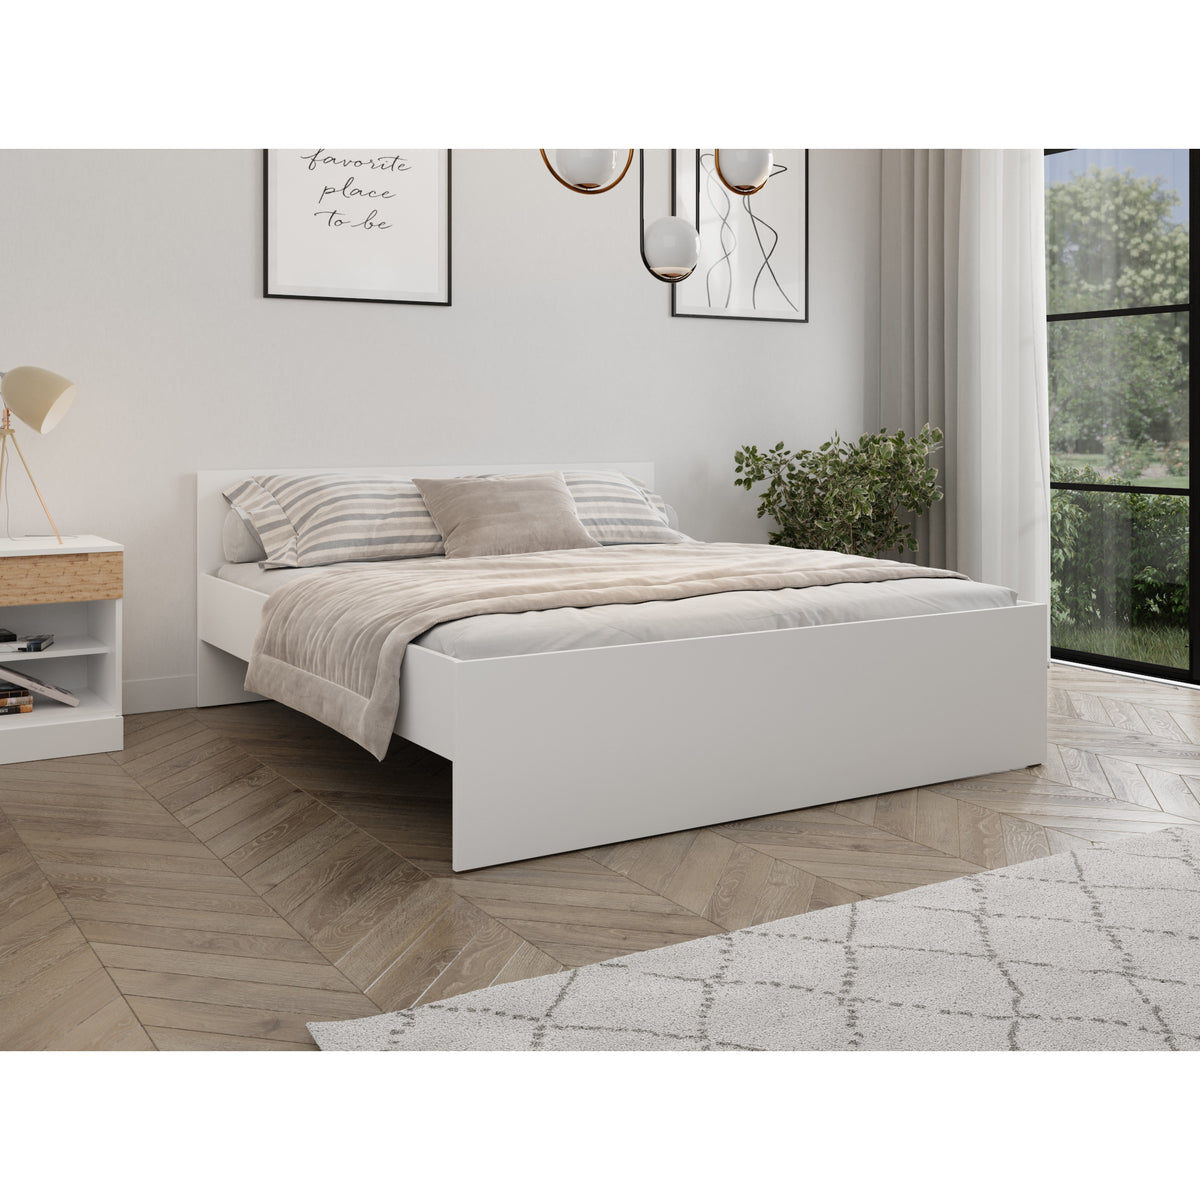 Drevená posteľ Fontemo 180x200, biela, bez matraca a roštu